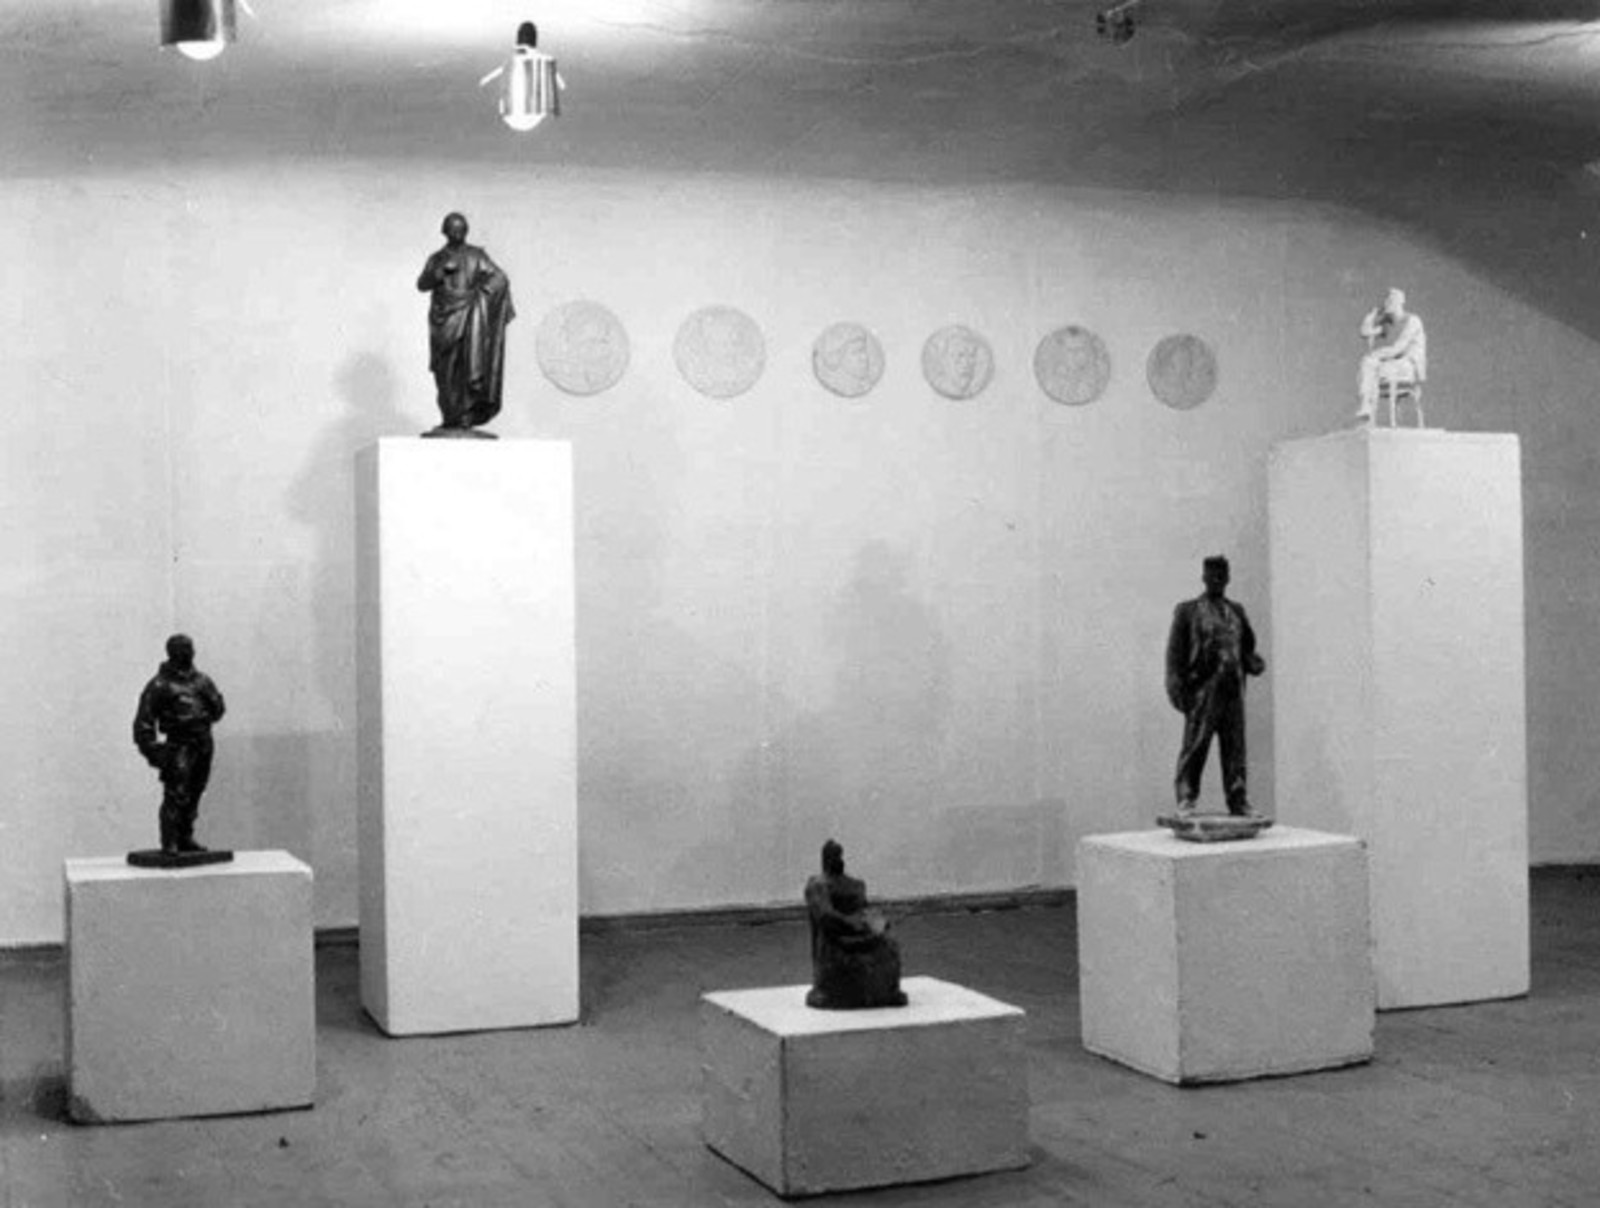 Sculpture  Exhibition project - Vladimir Dubosarskiy  November 14, 1991